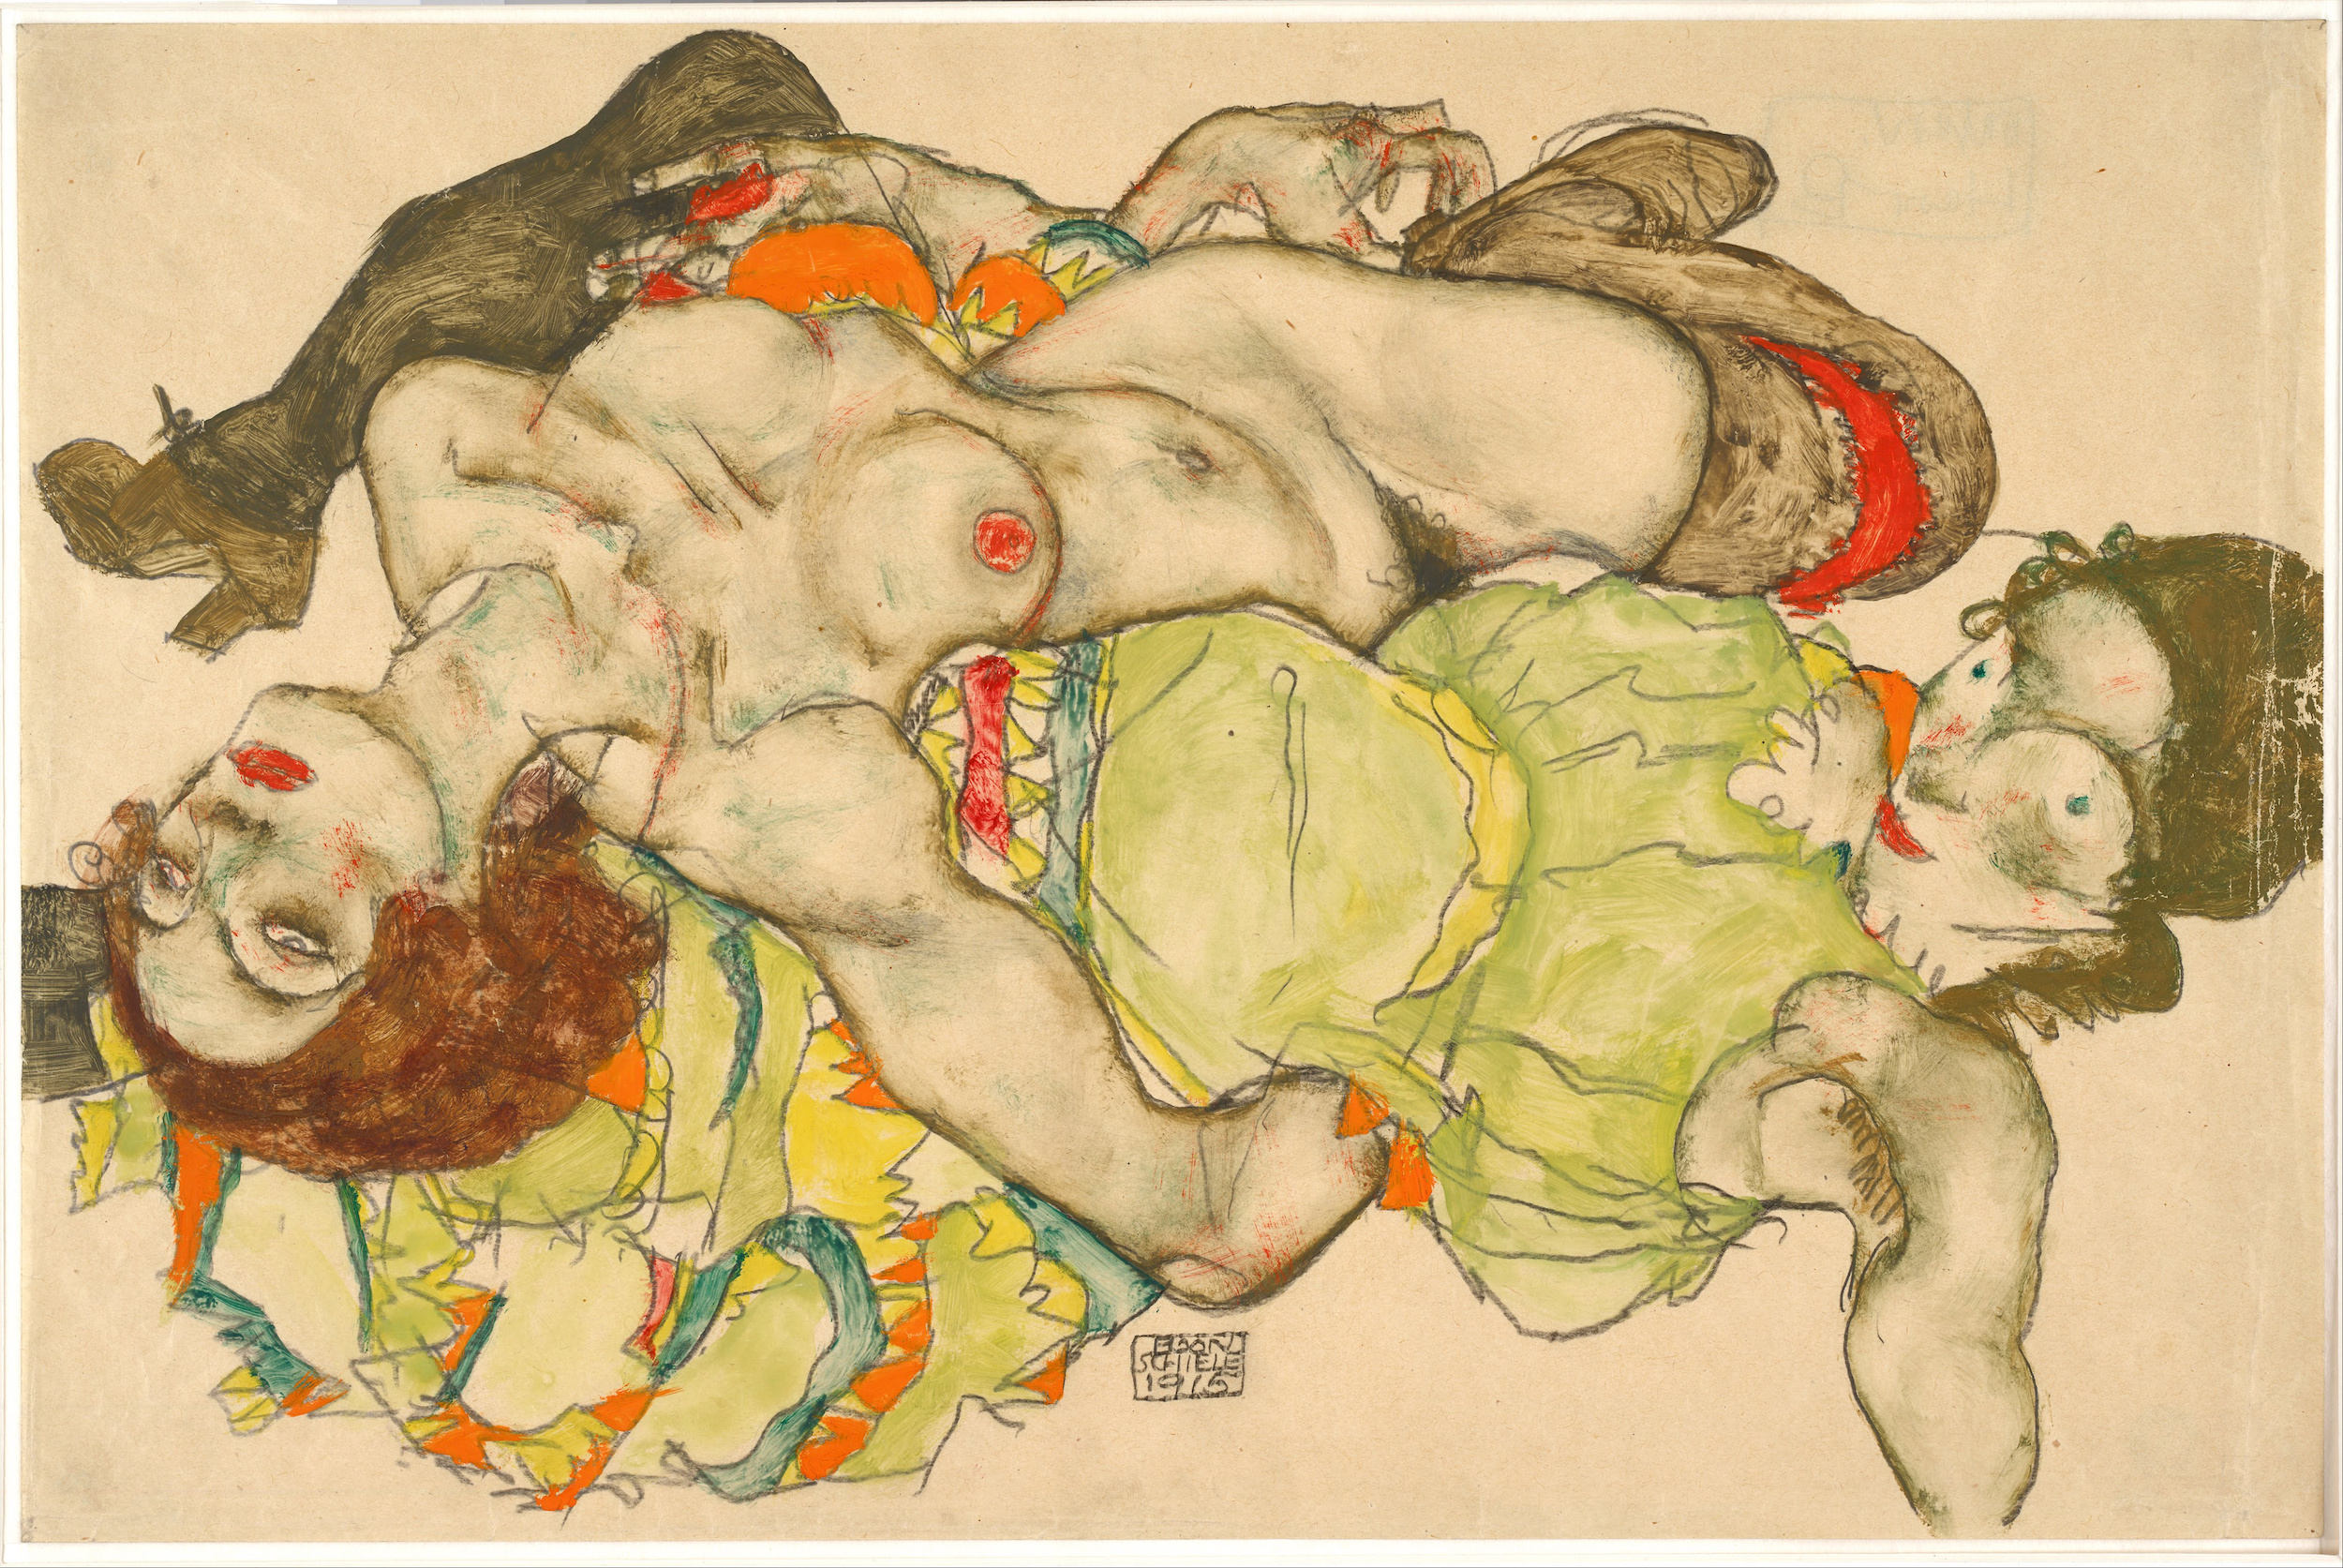 Femei iubindu-se  by Egon Schiele - 1915 